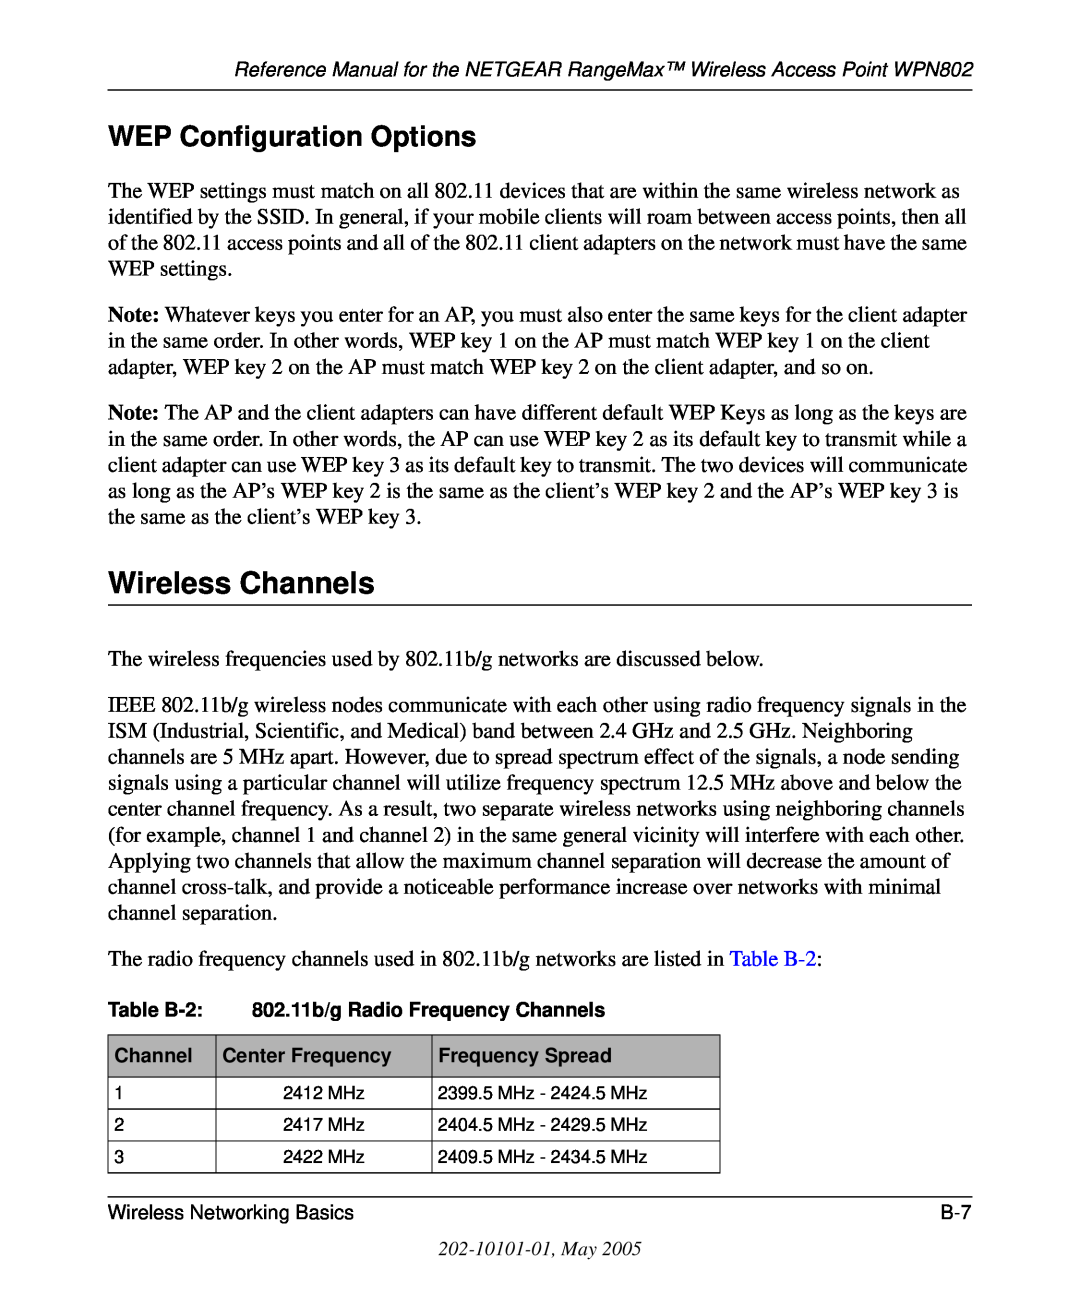 NETGEAR WPN802 manual Wireless Channels, WEP Configuration Options 